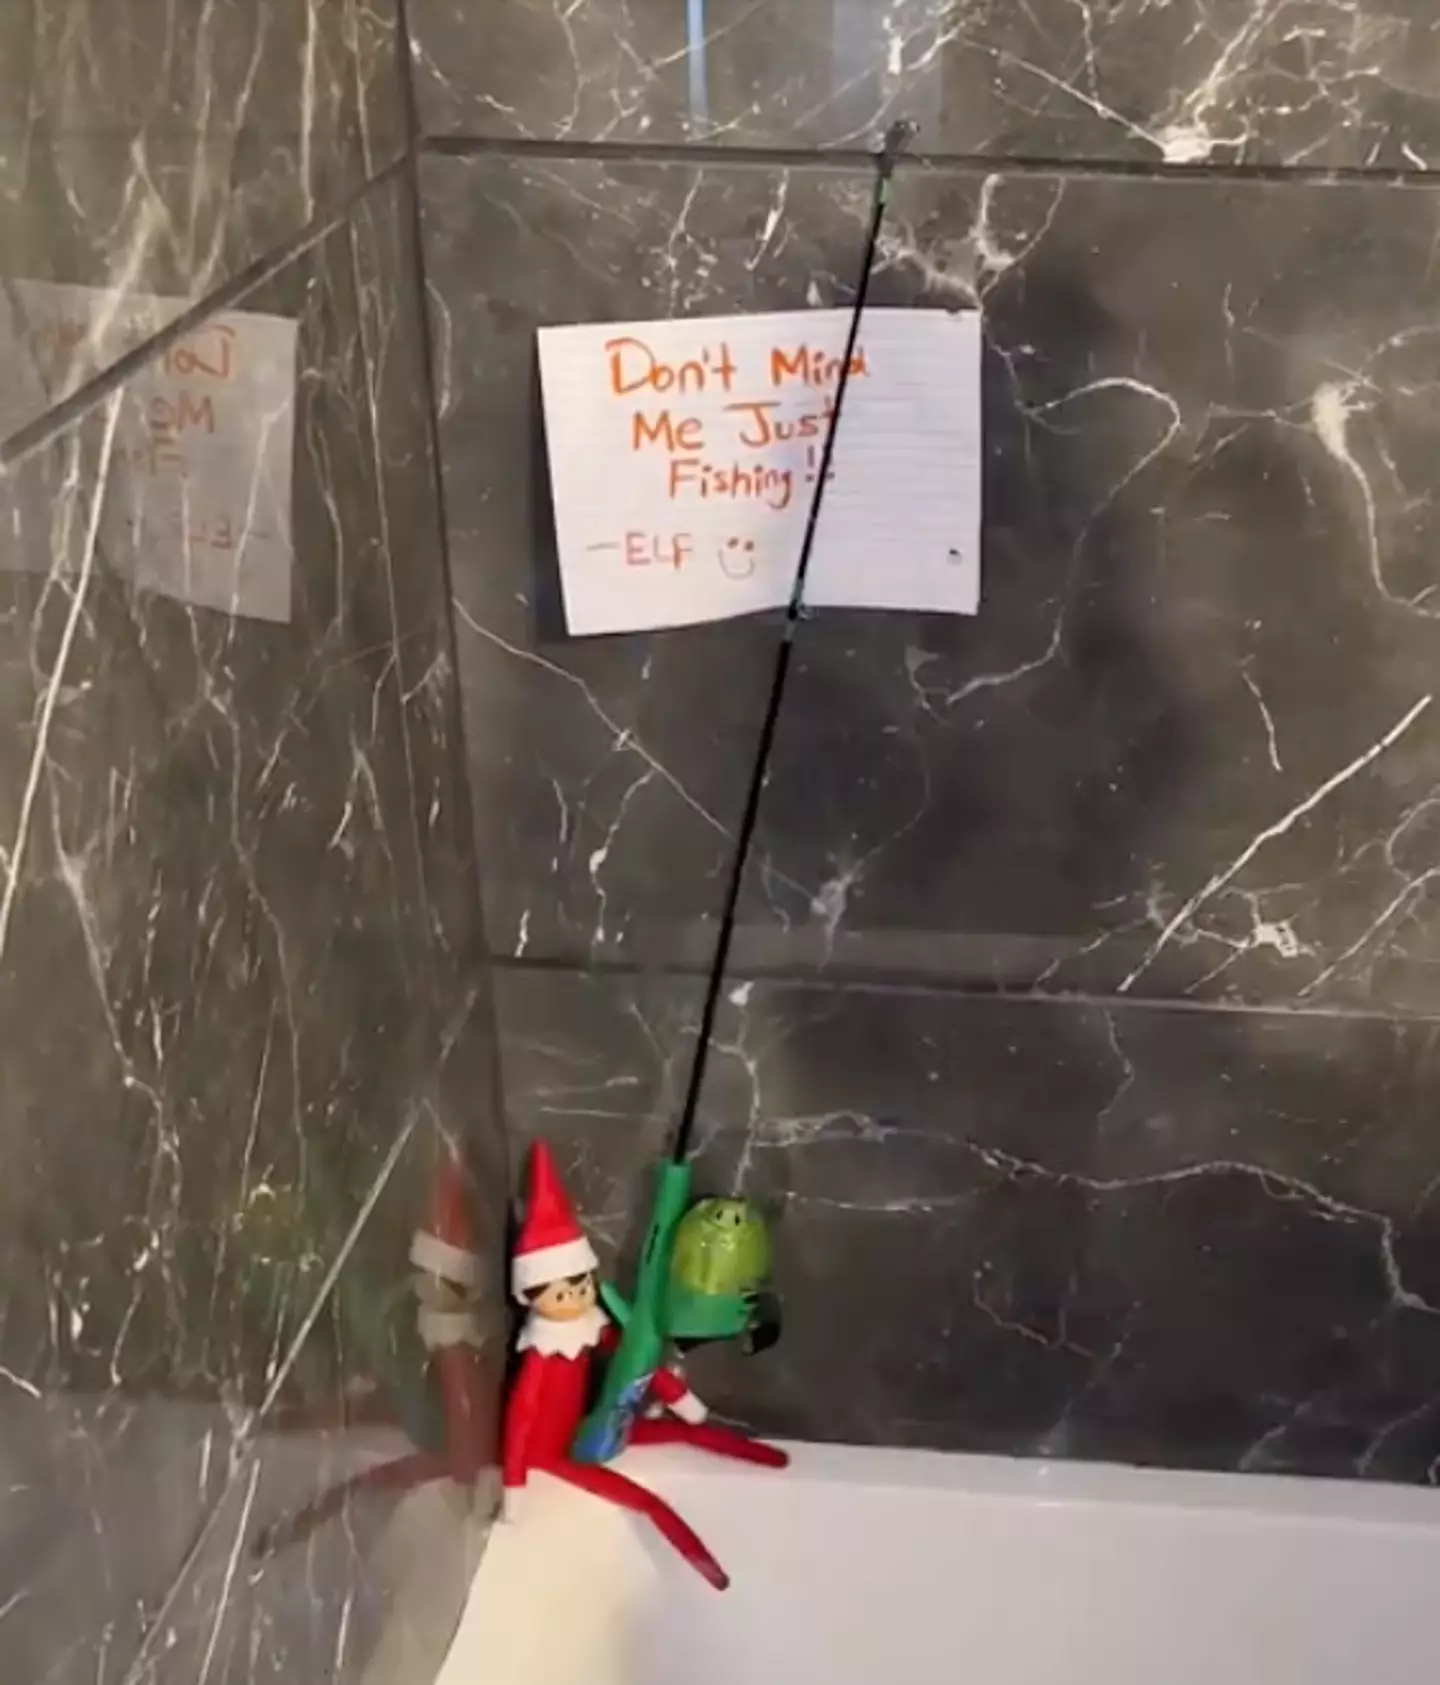 TikToker Cece has been slammed for her 'cruel' and 'disturbing' Elf on the Shelf setup.